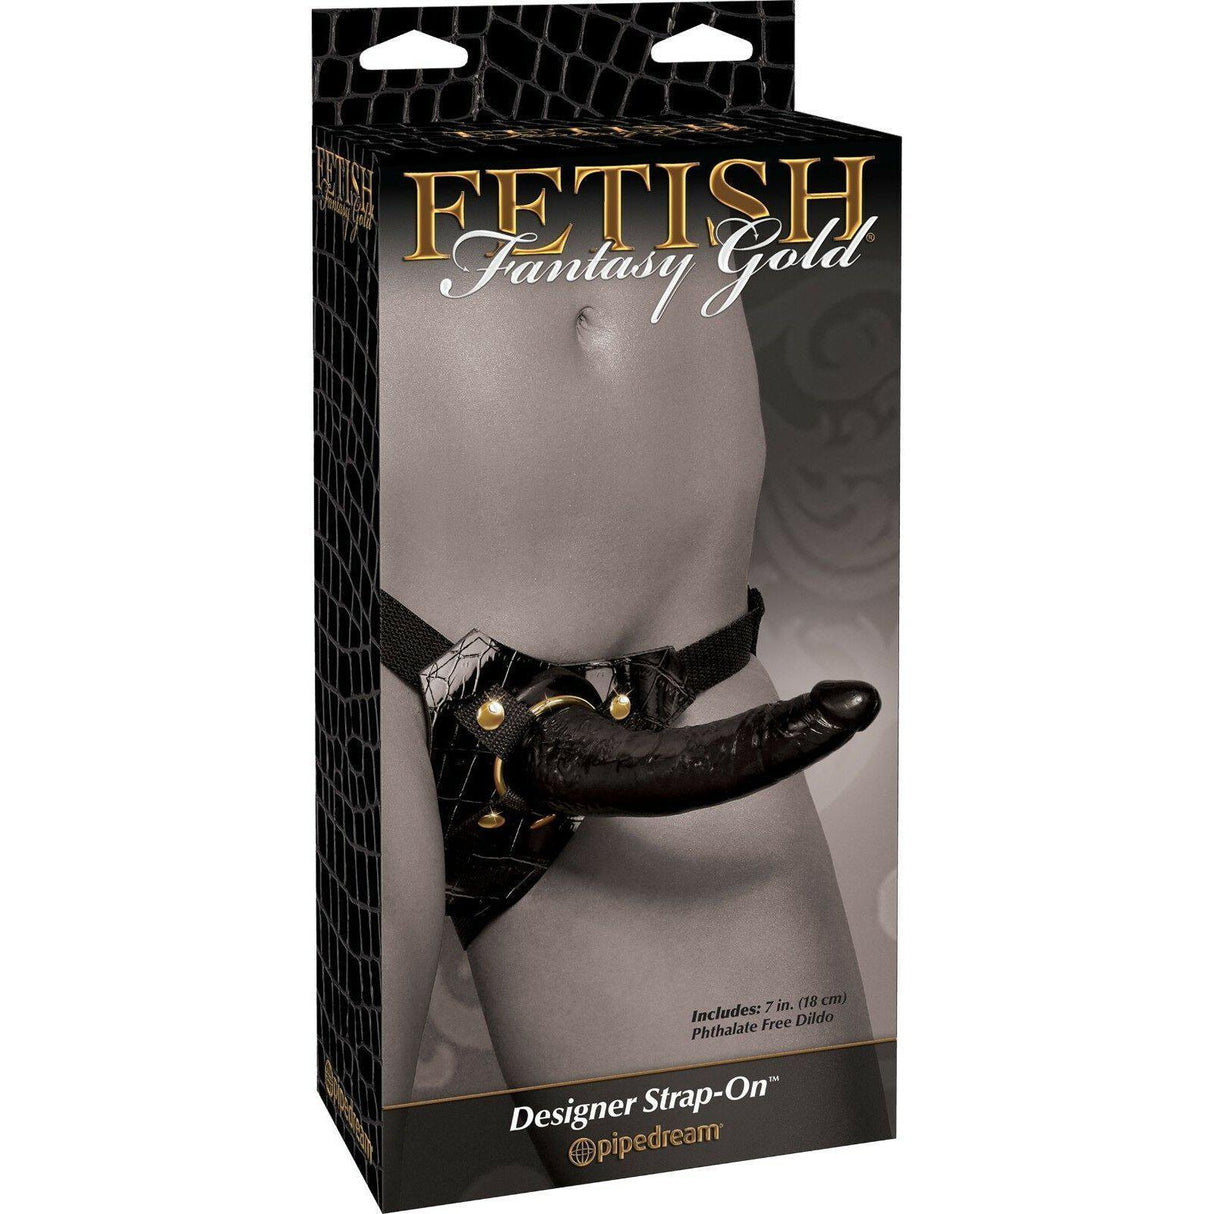 Fetish Fantasy Gold Designer Strap-on with Dildo